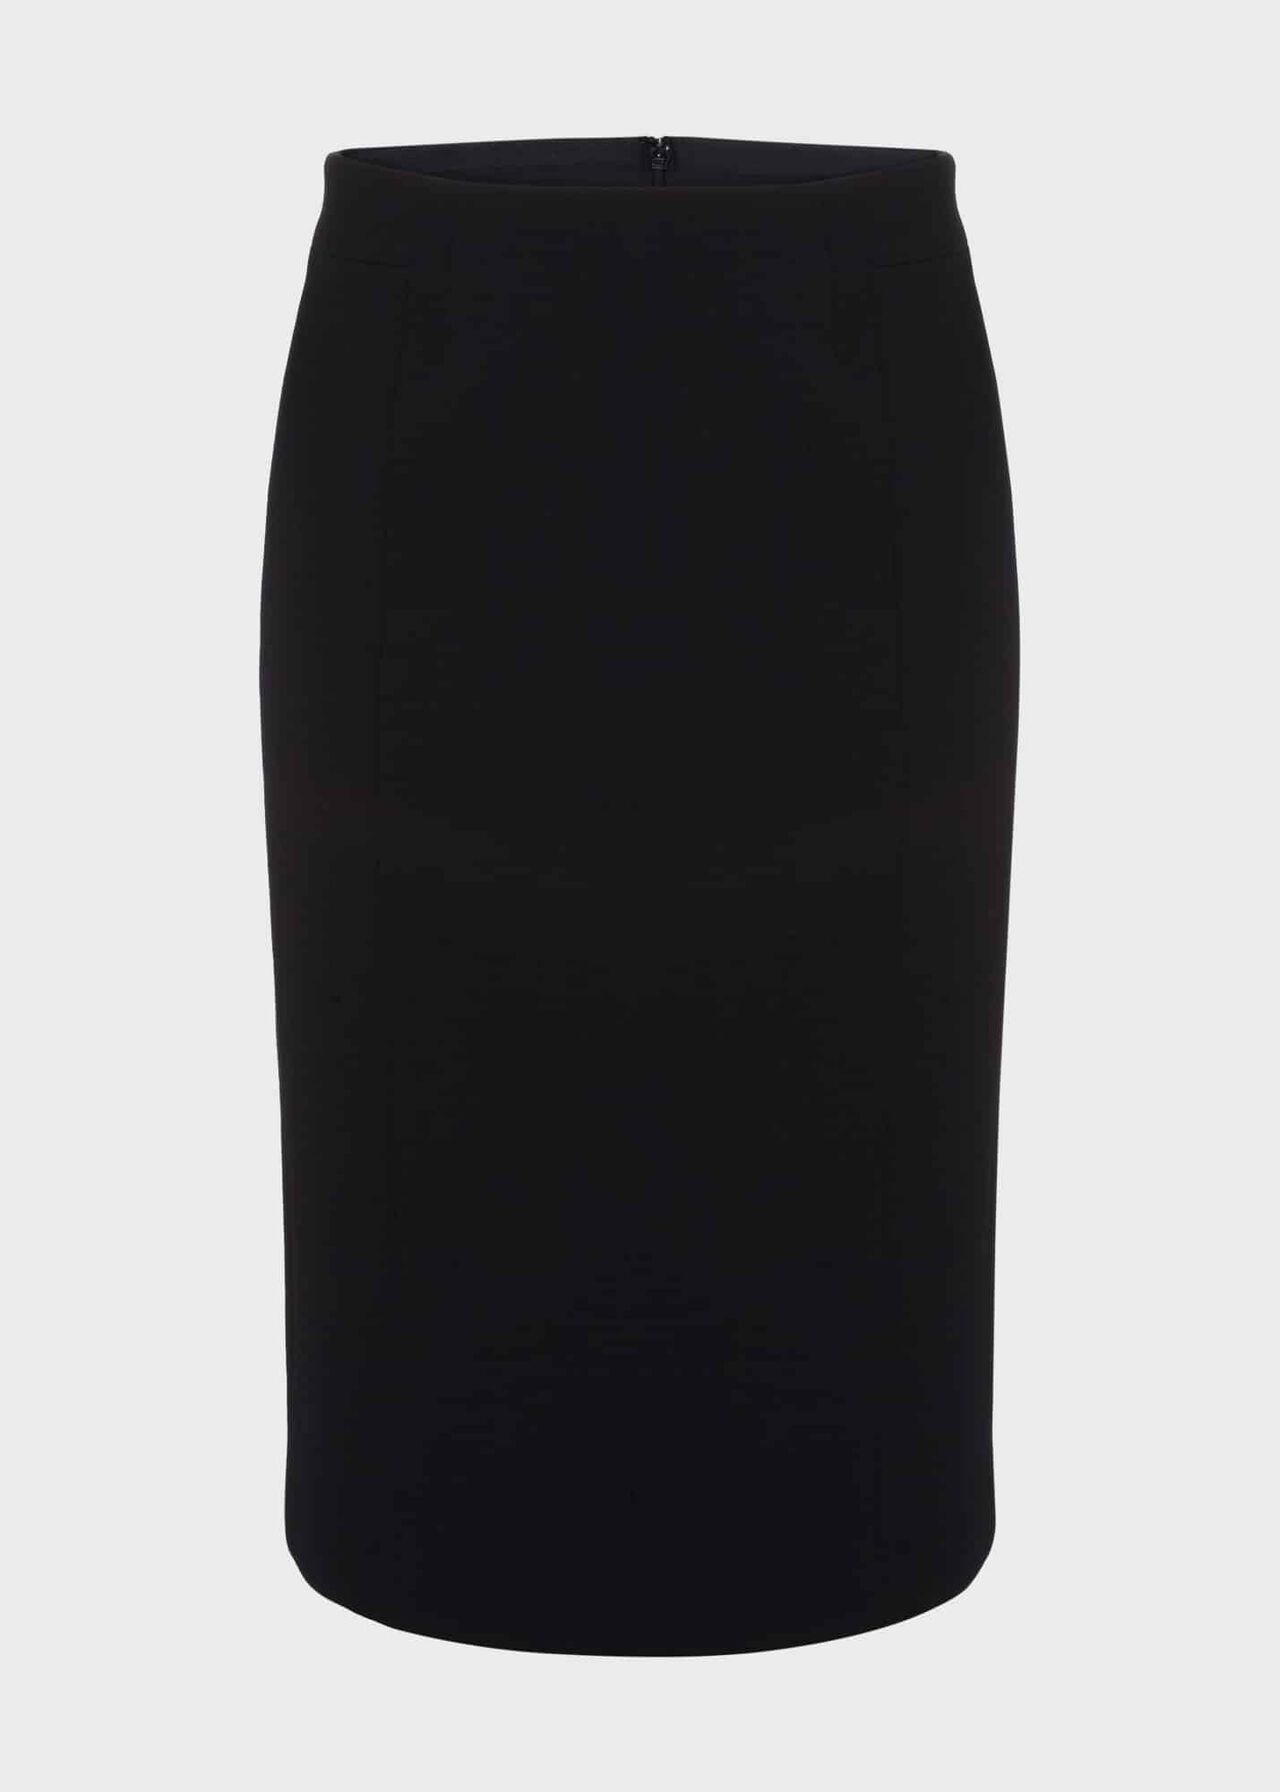 Petite Charley Skirt, Black, hi-res